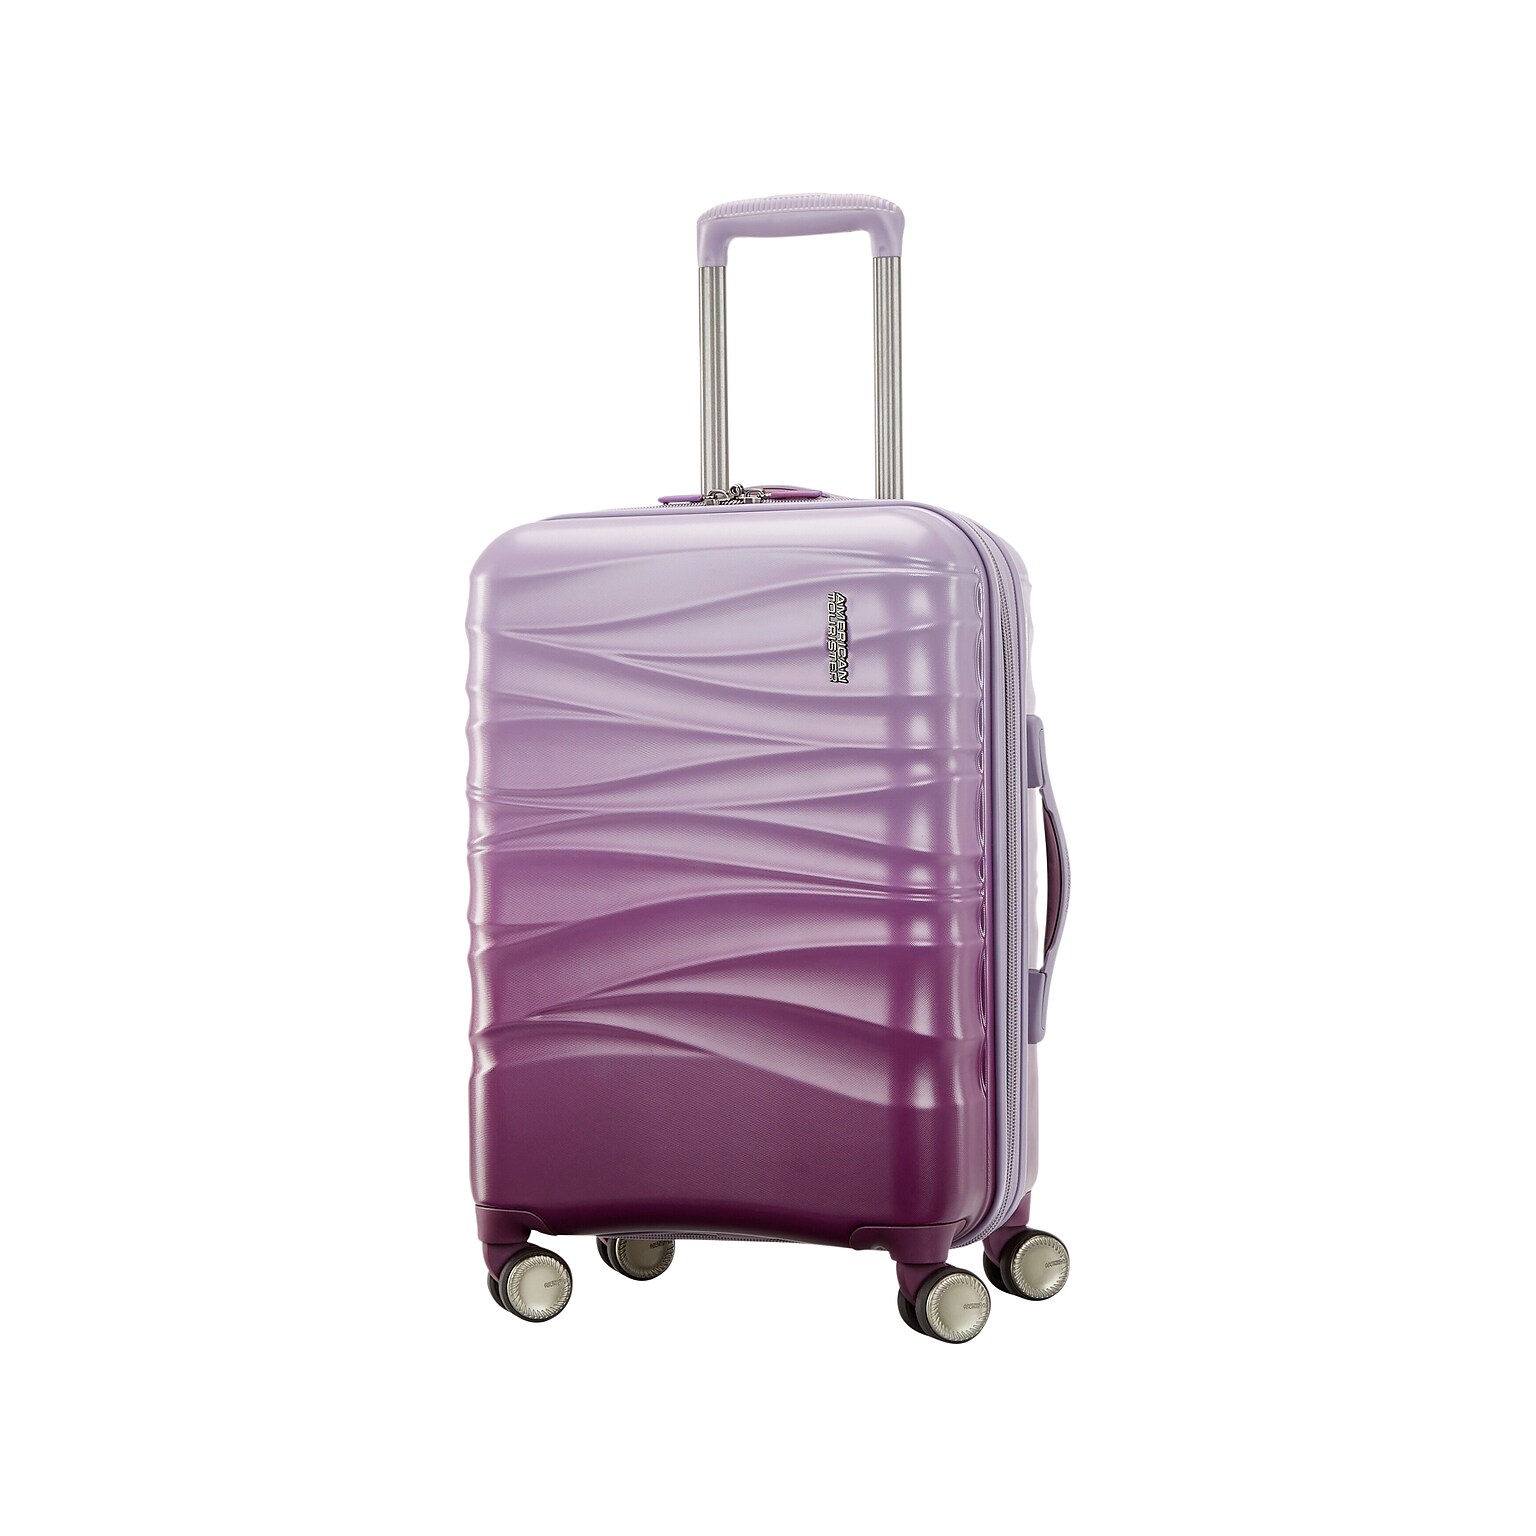 American Tourister Cascade 22 Hardside Carry-On Suitcase, 4-Wheeled Spinner, Purple Haze (143244-4321)